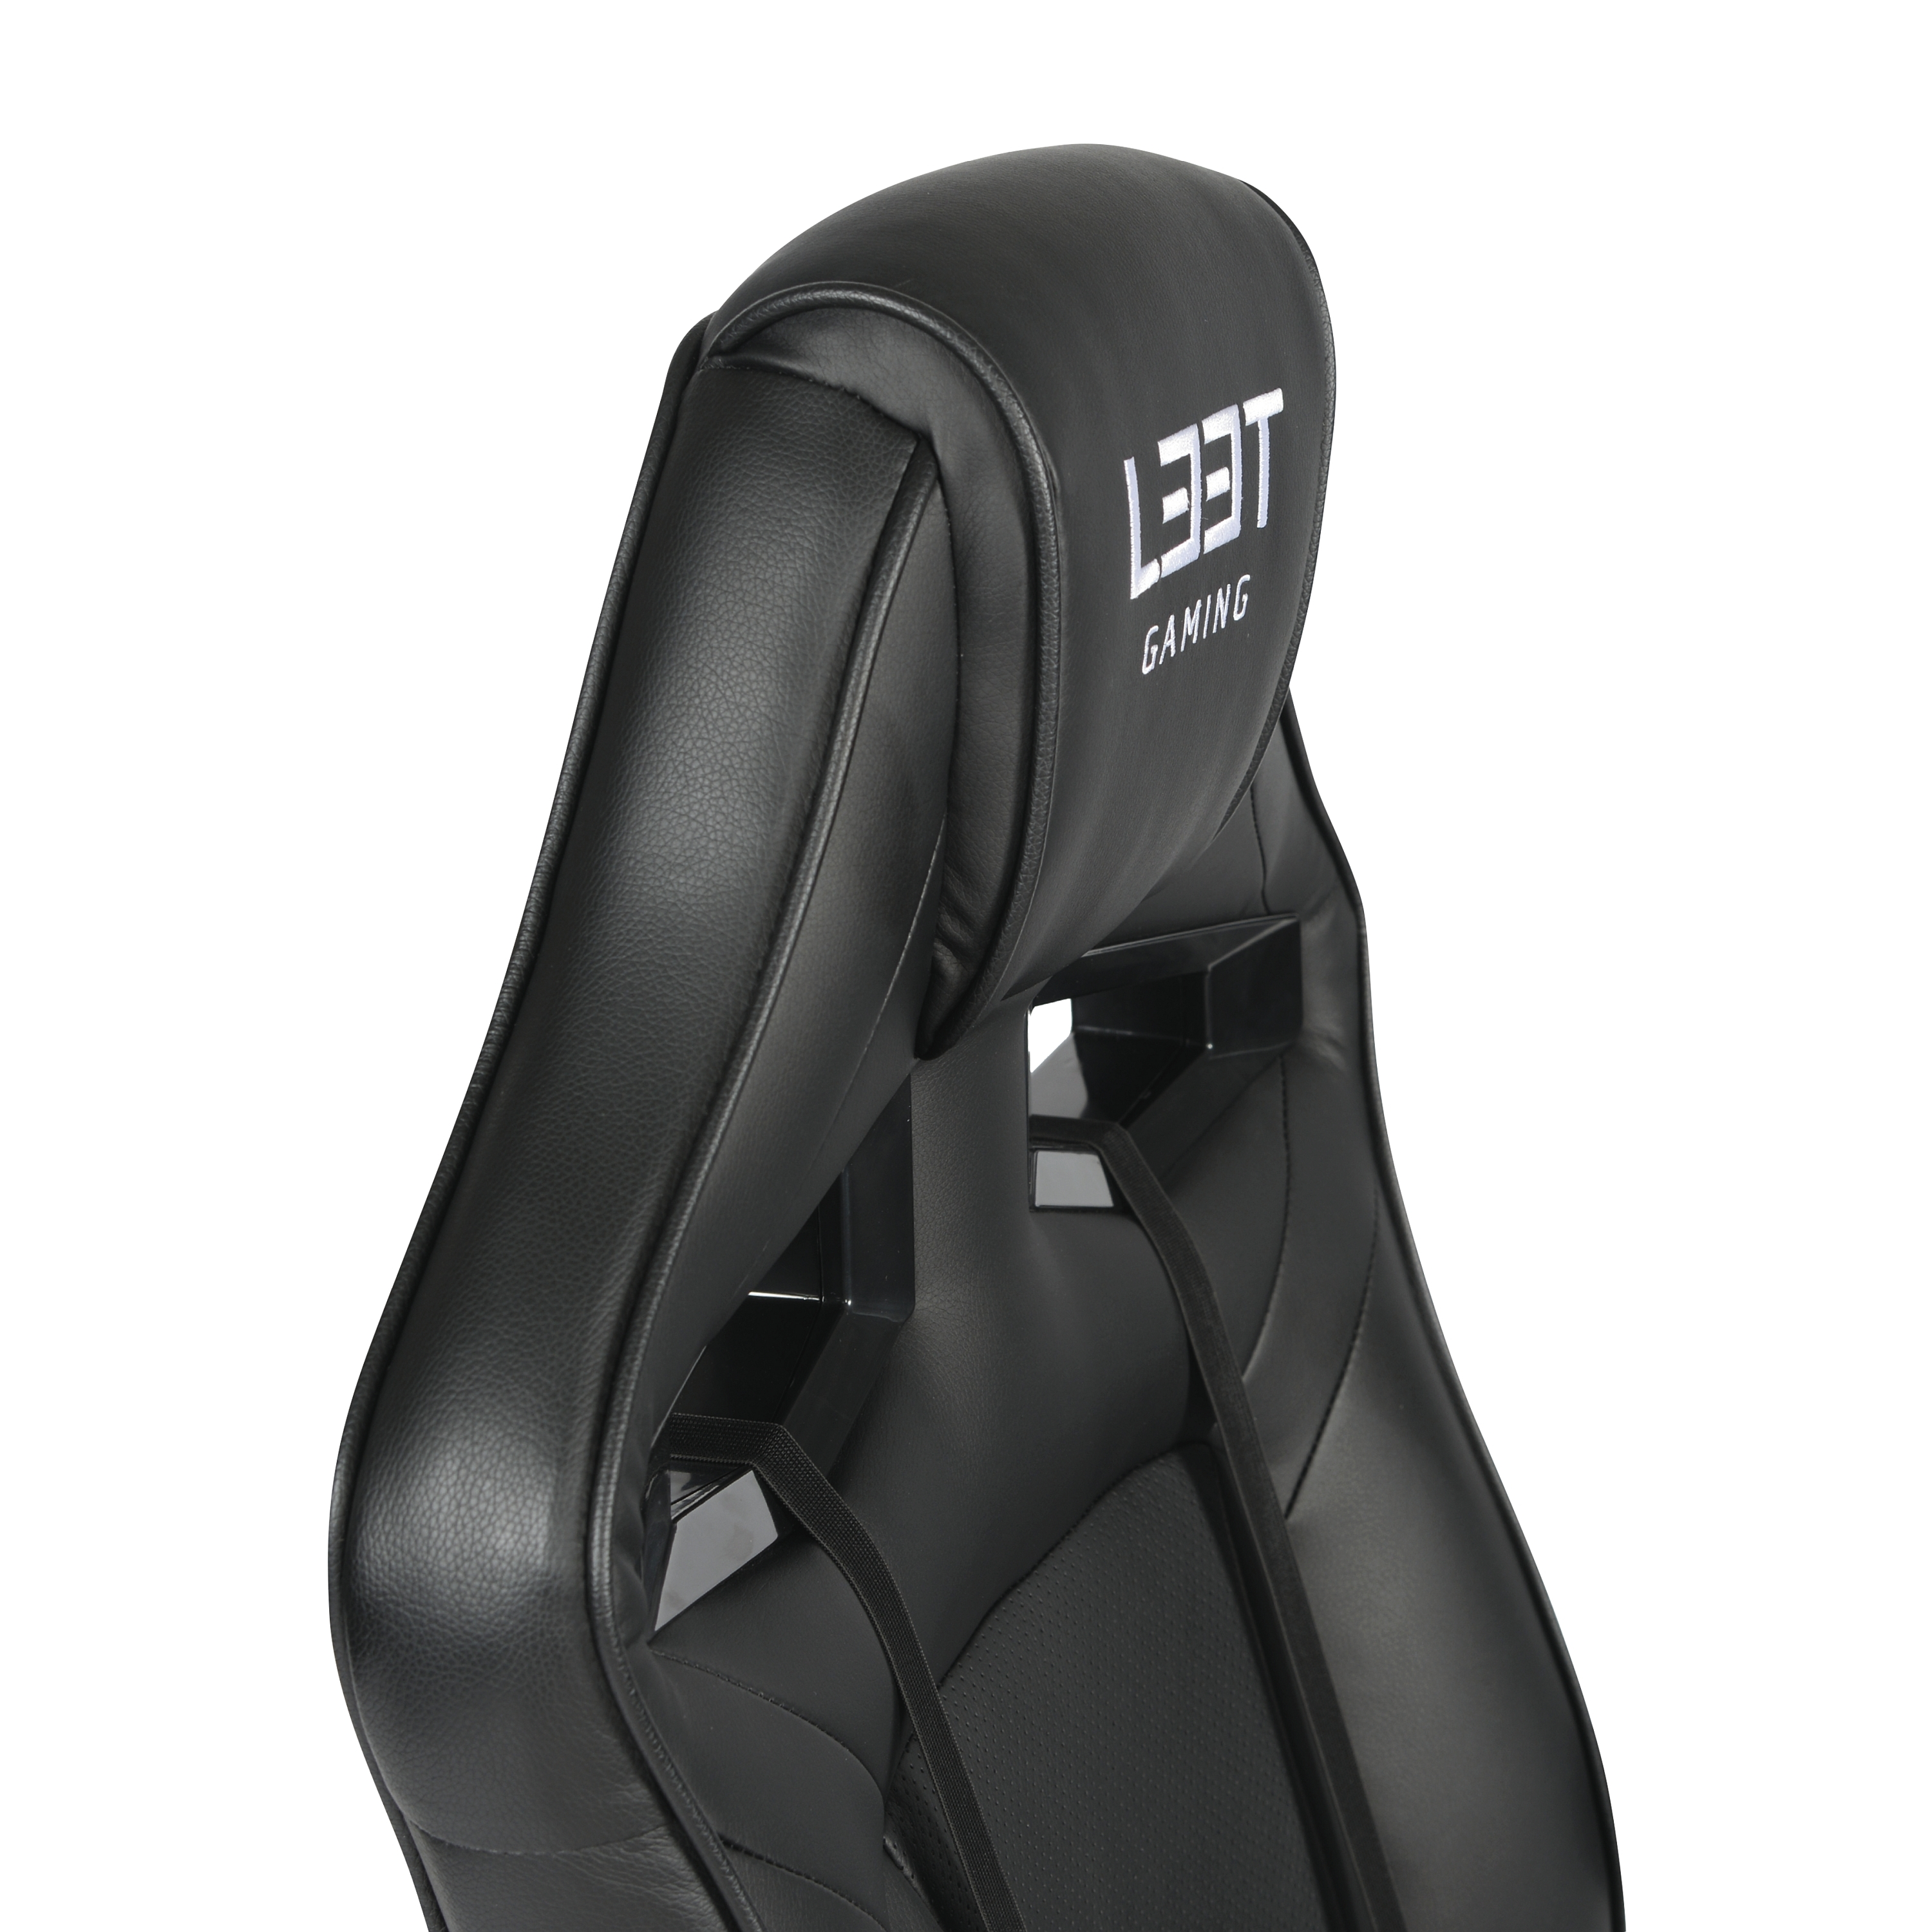 Gaming 160565 L33T schwarz Stuhl,